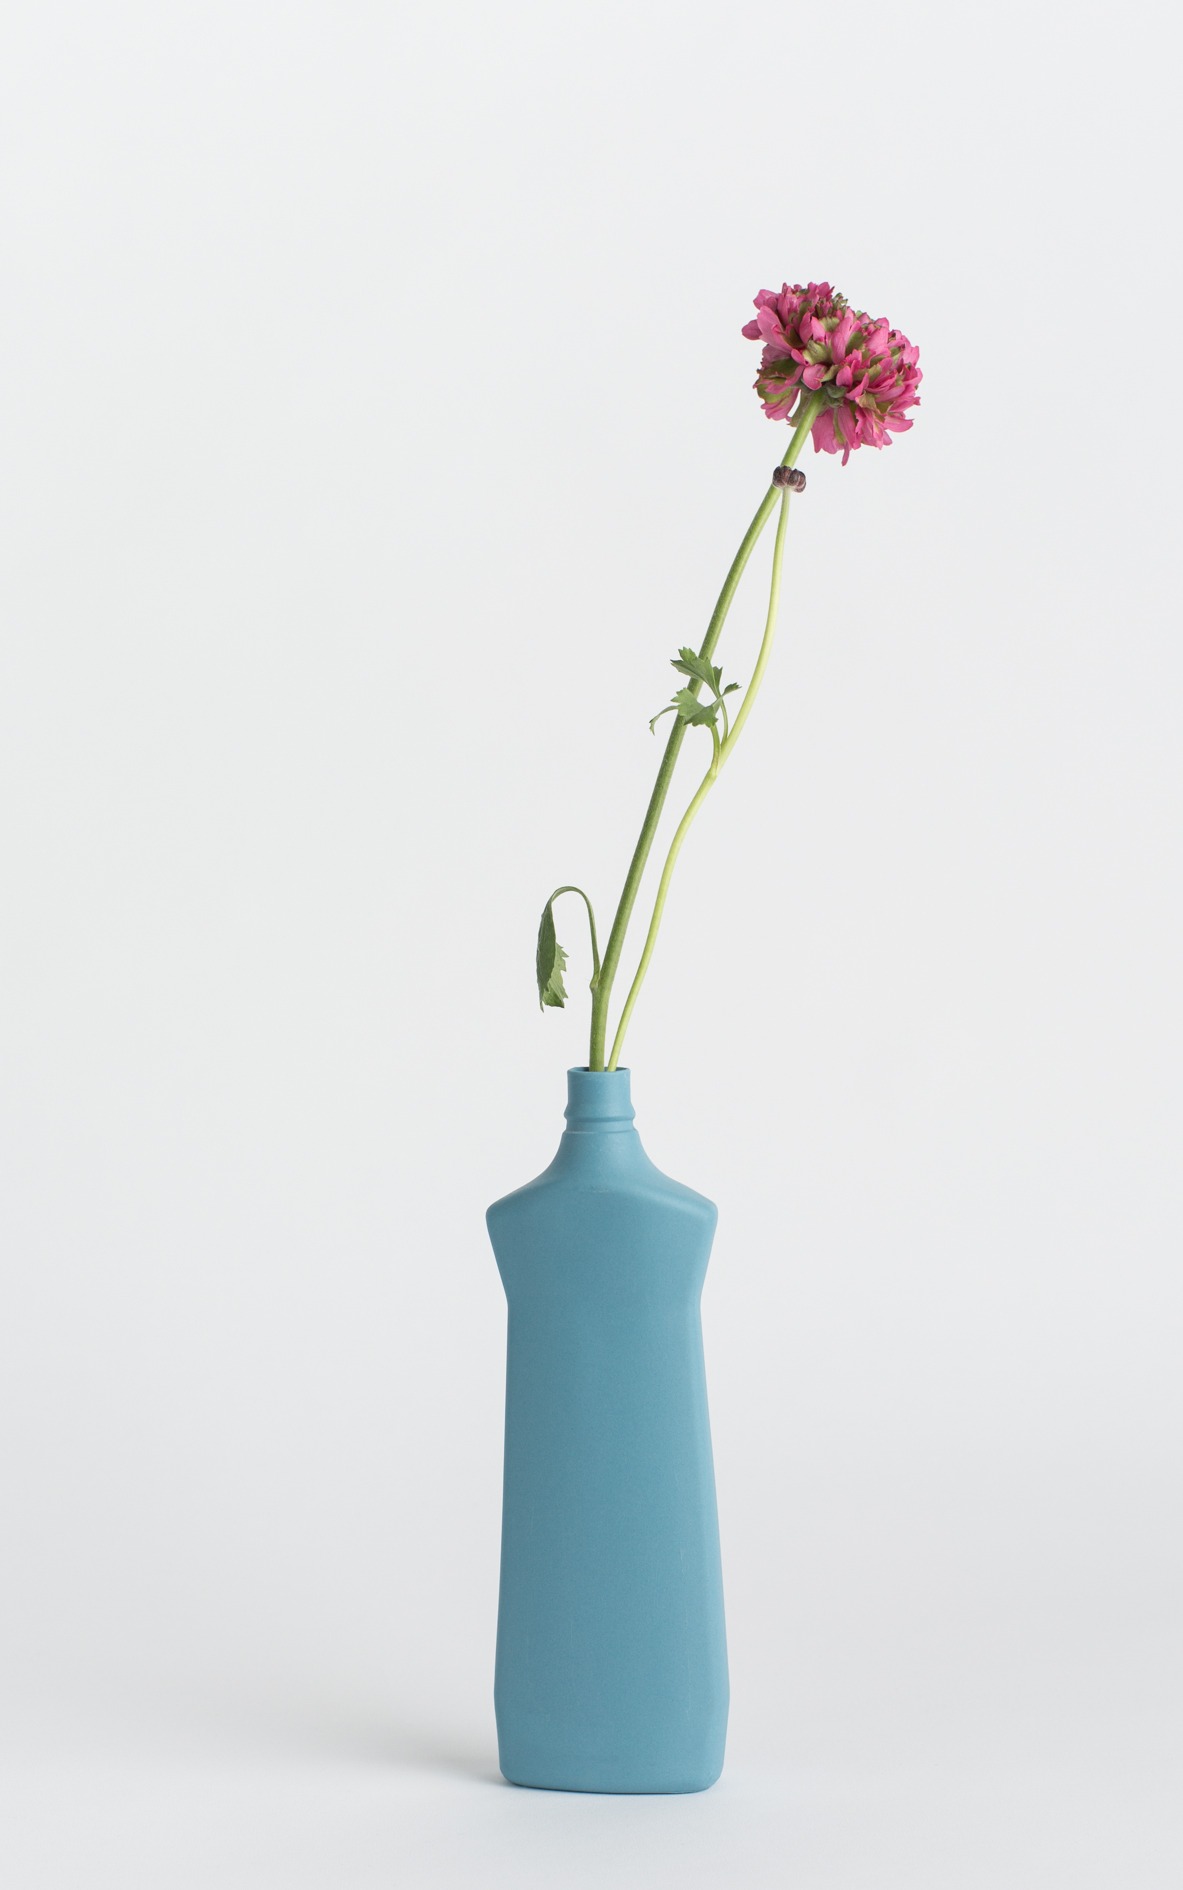 bottle vase #1 dark blue with flower